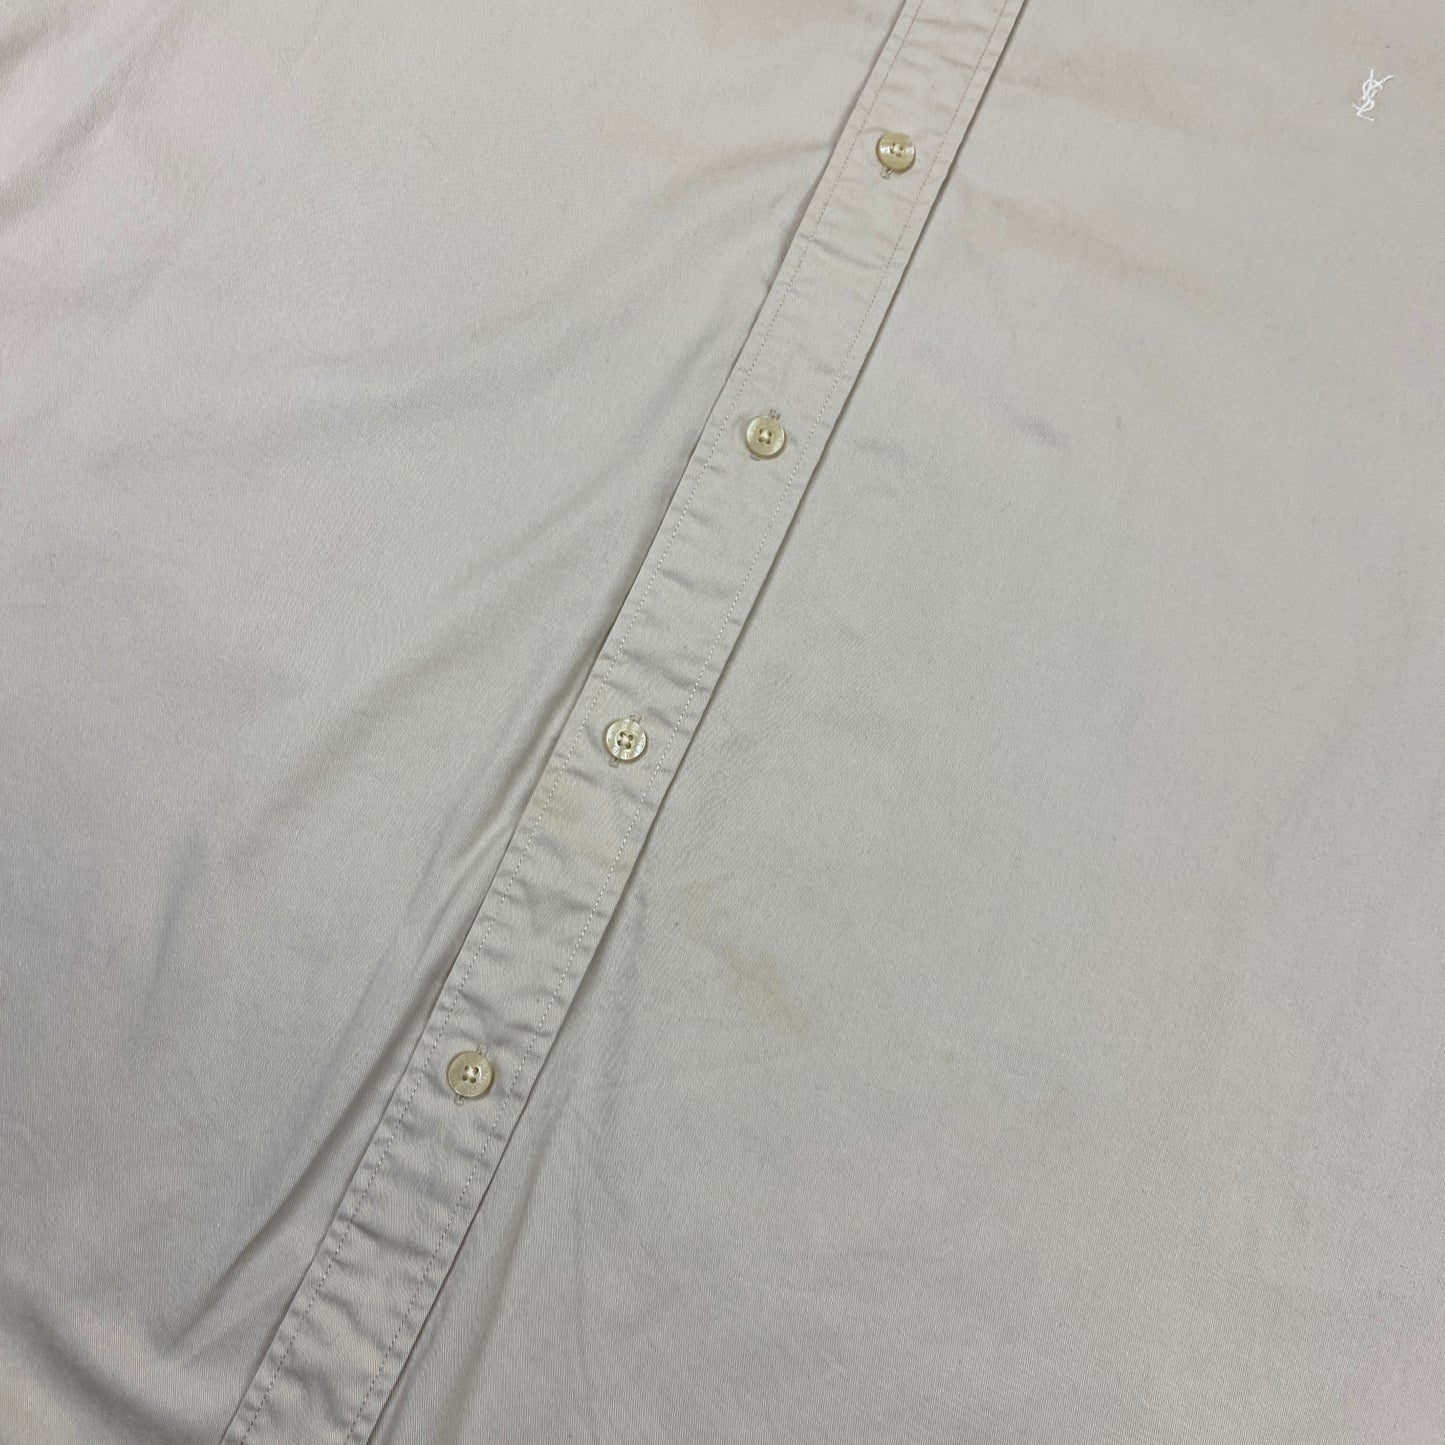 Yves Saint Laurent embroidered shirt (XL-XXL)